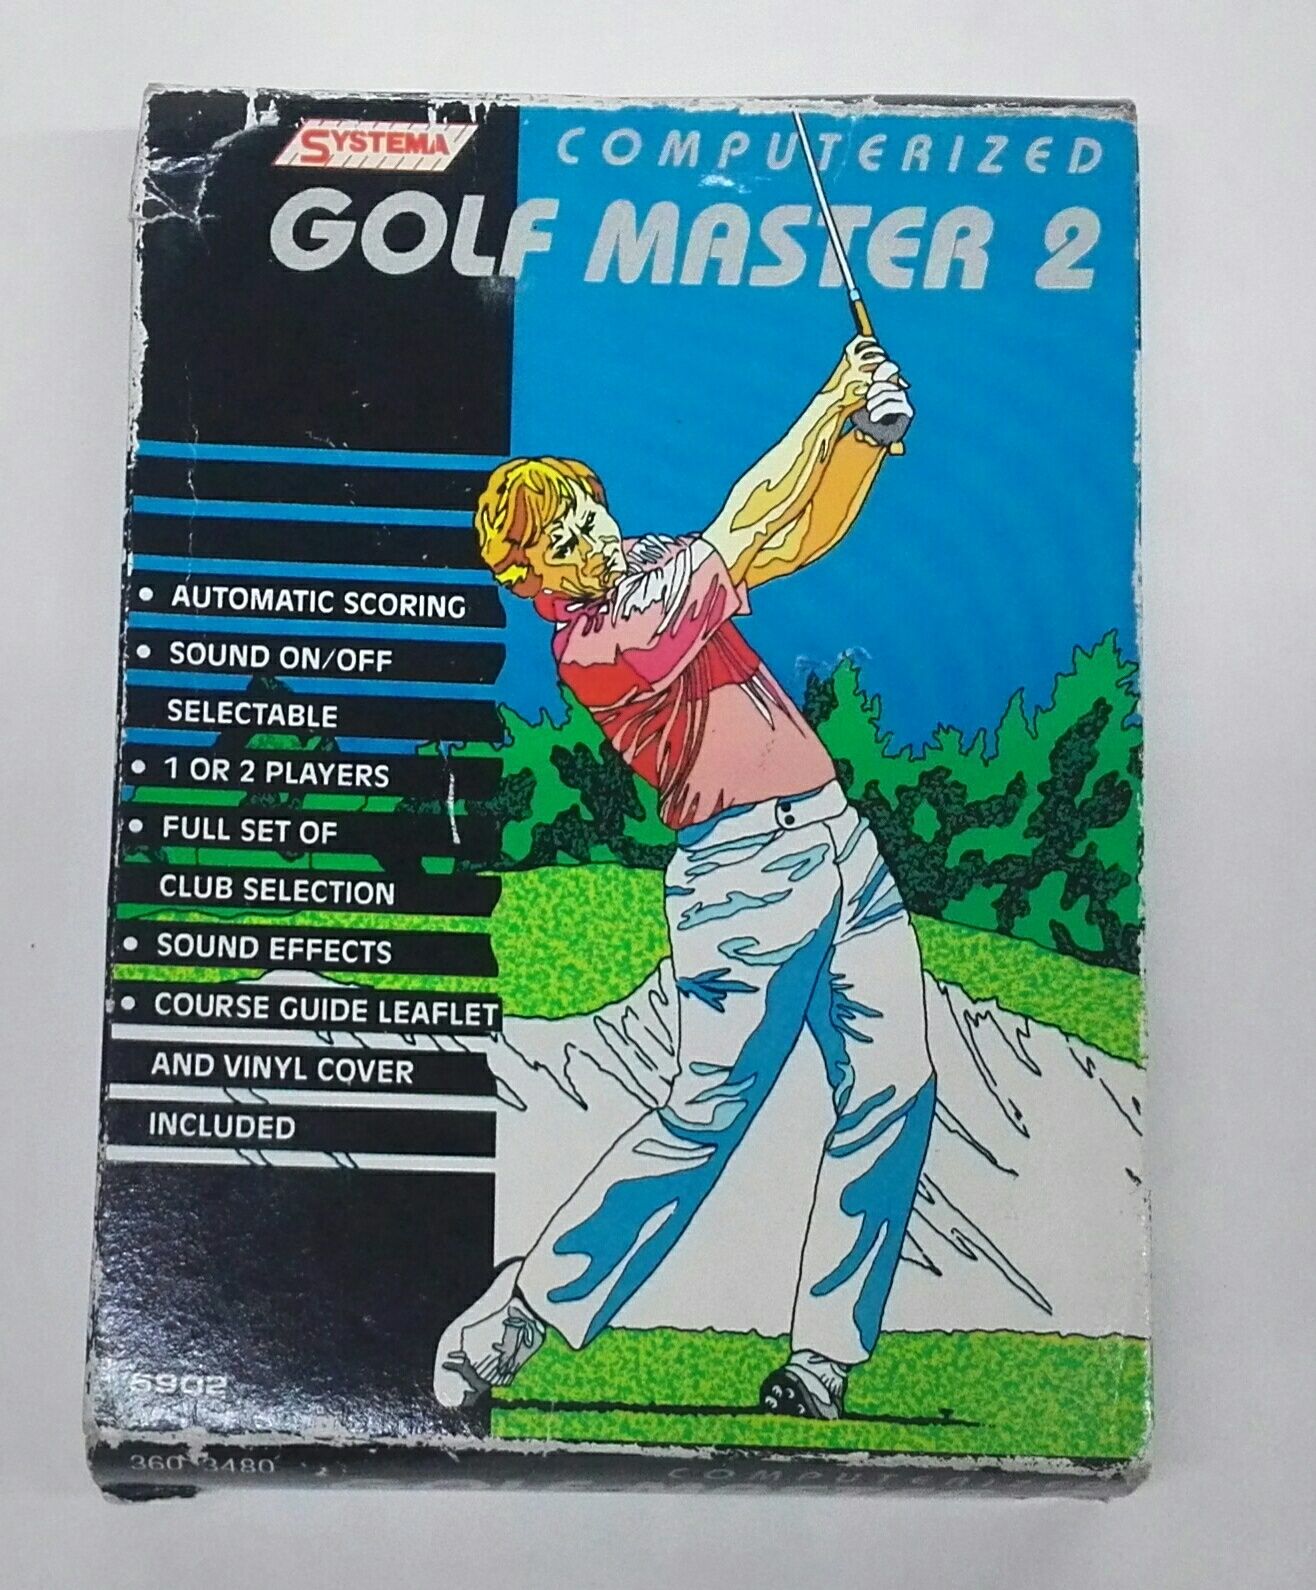 Golf Master 2 Computerized Systema mini gra elektroniczna RETRO